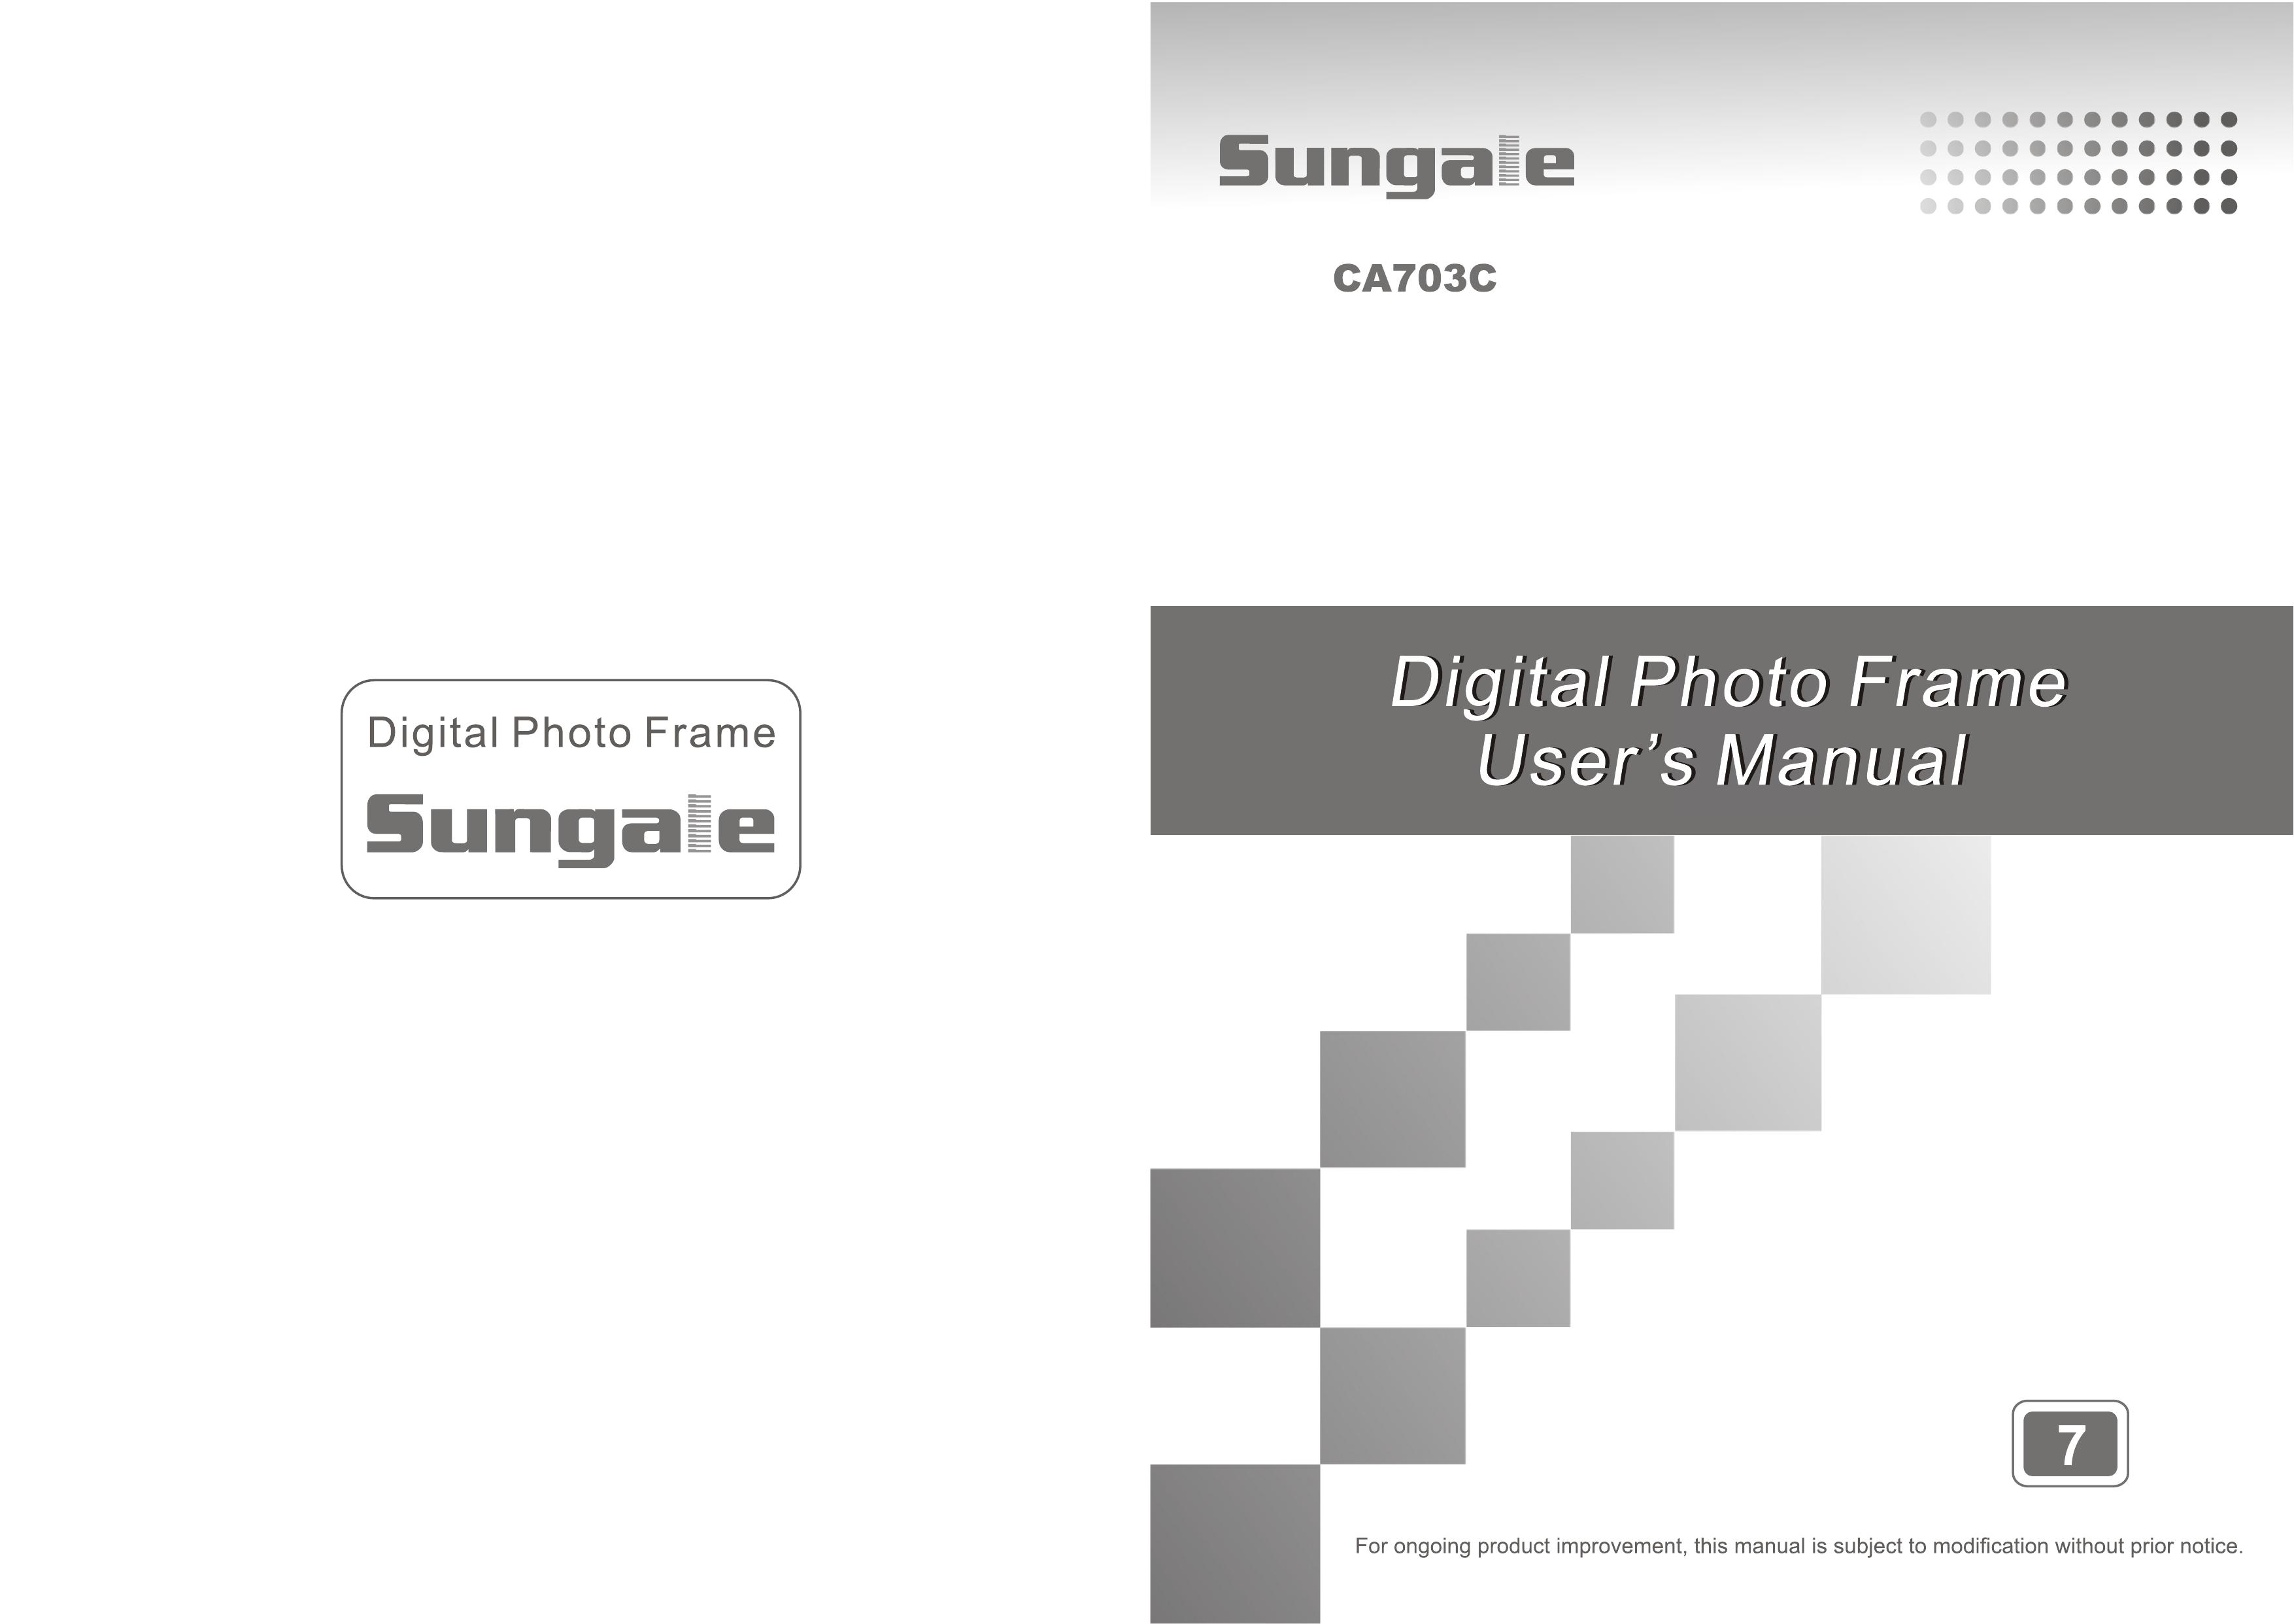 Sungale CA703C Digital Photo Frame User Manual